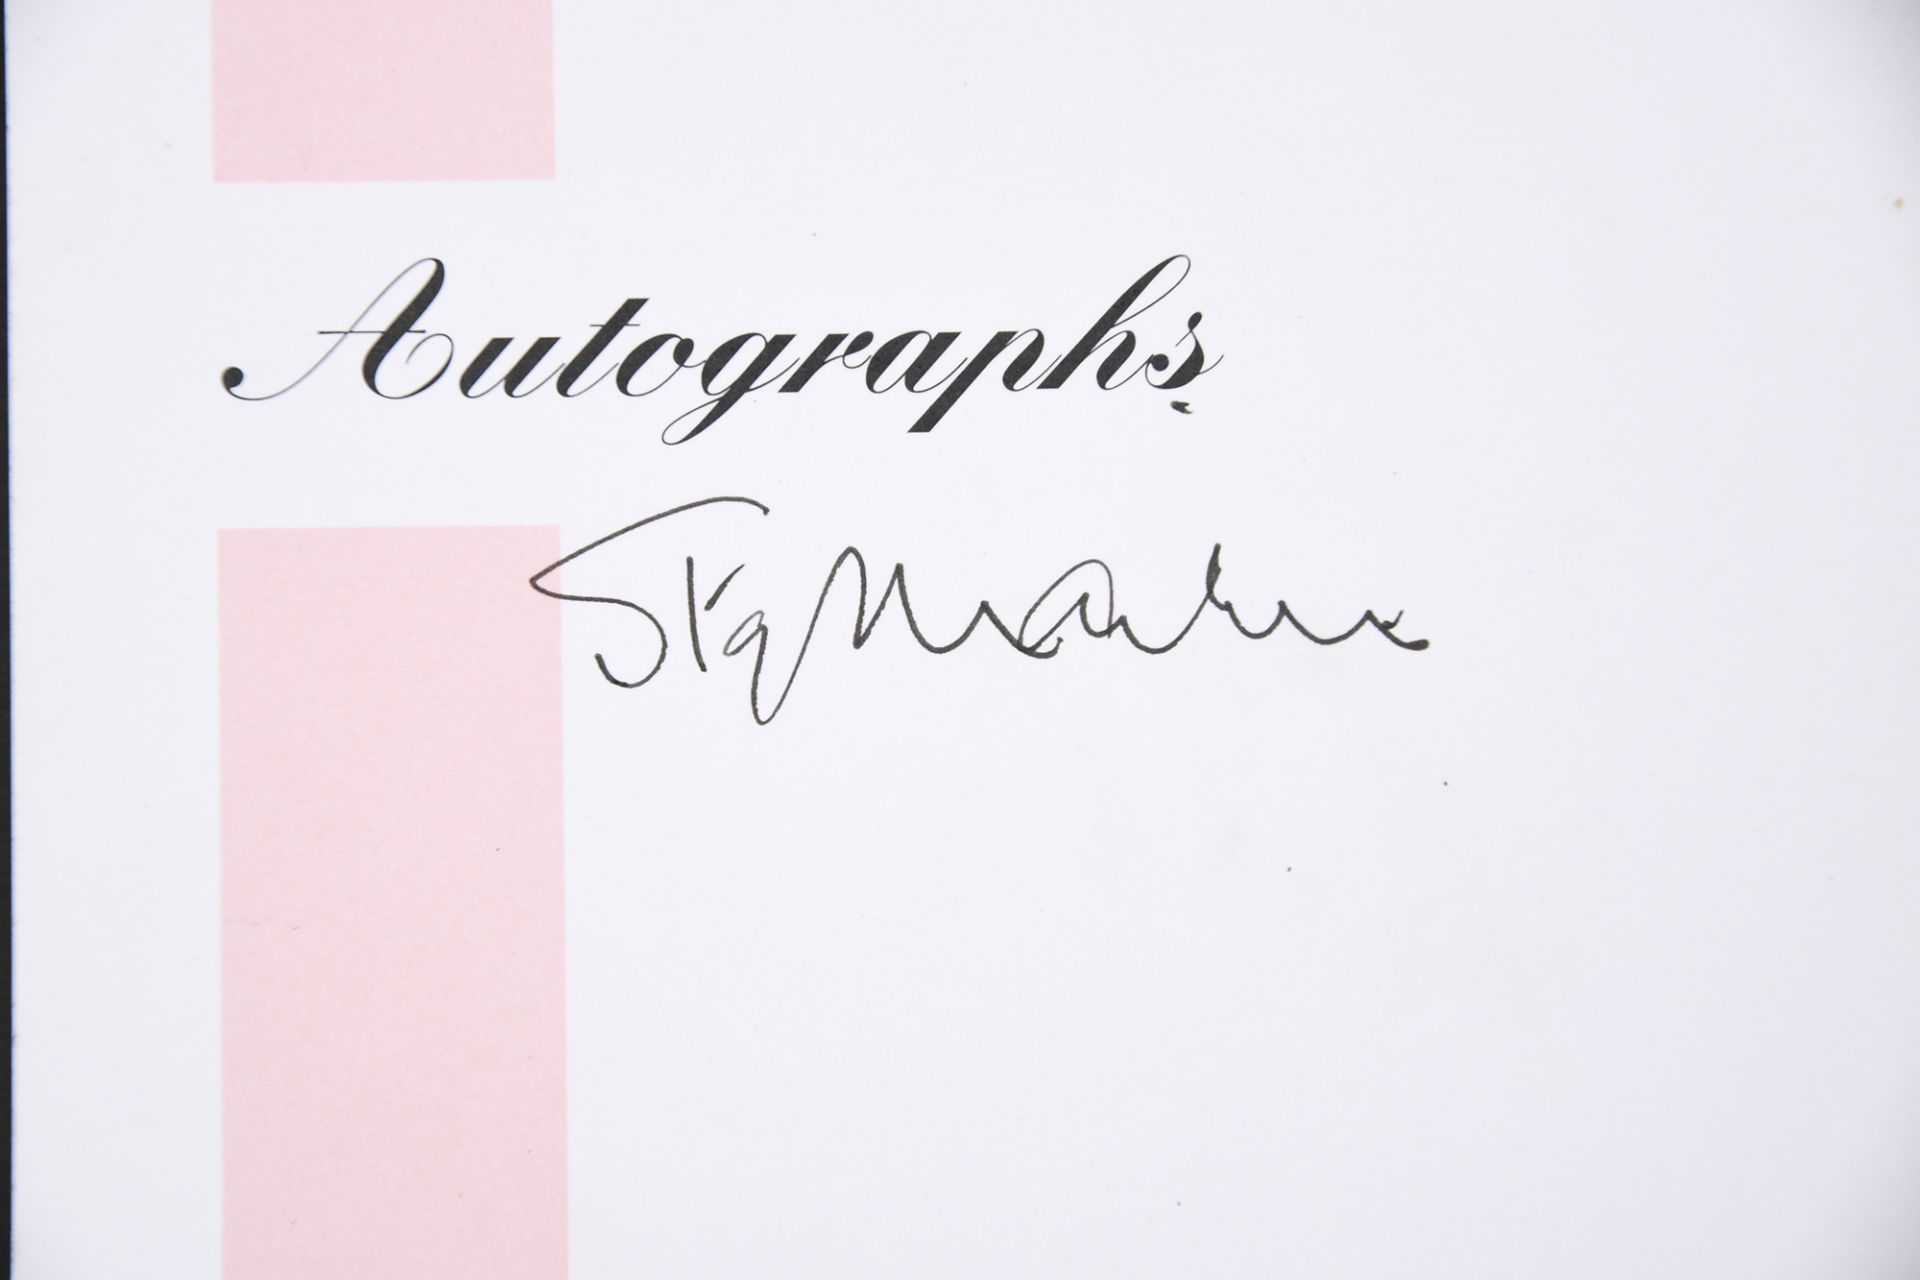 STANLEY MATTHEWS Original signature - Image 2 of 2